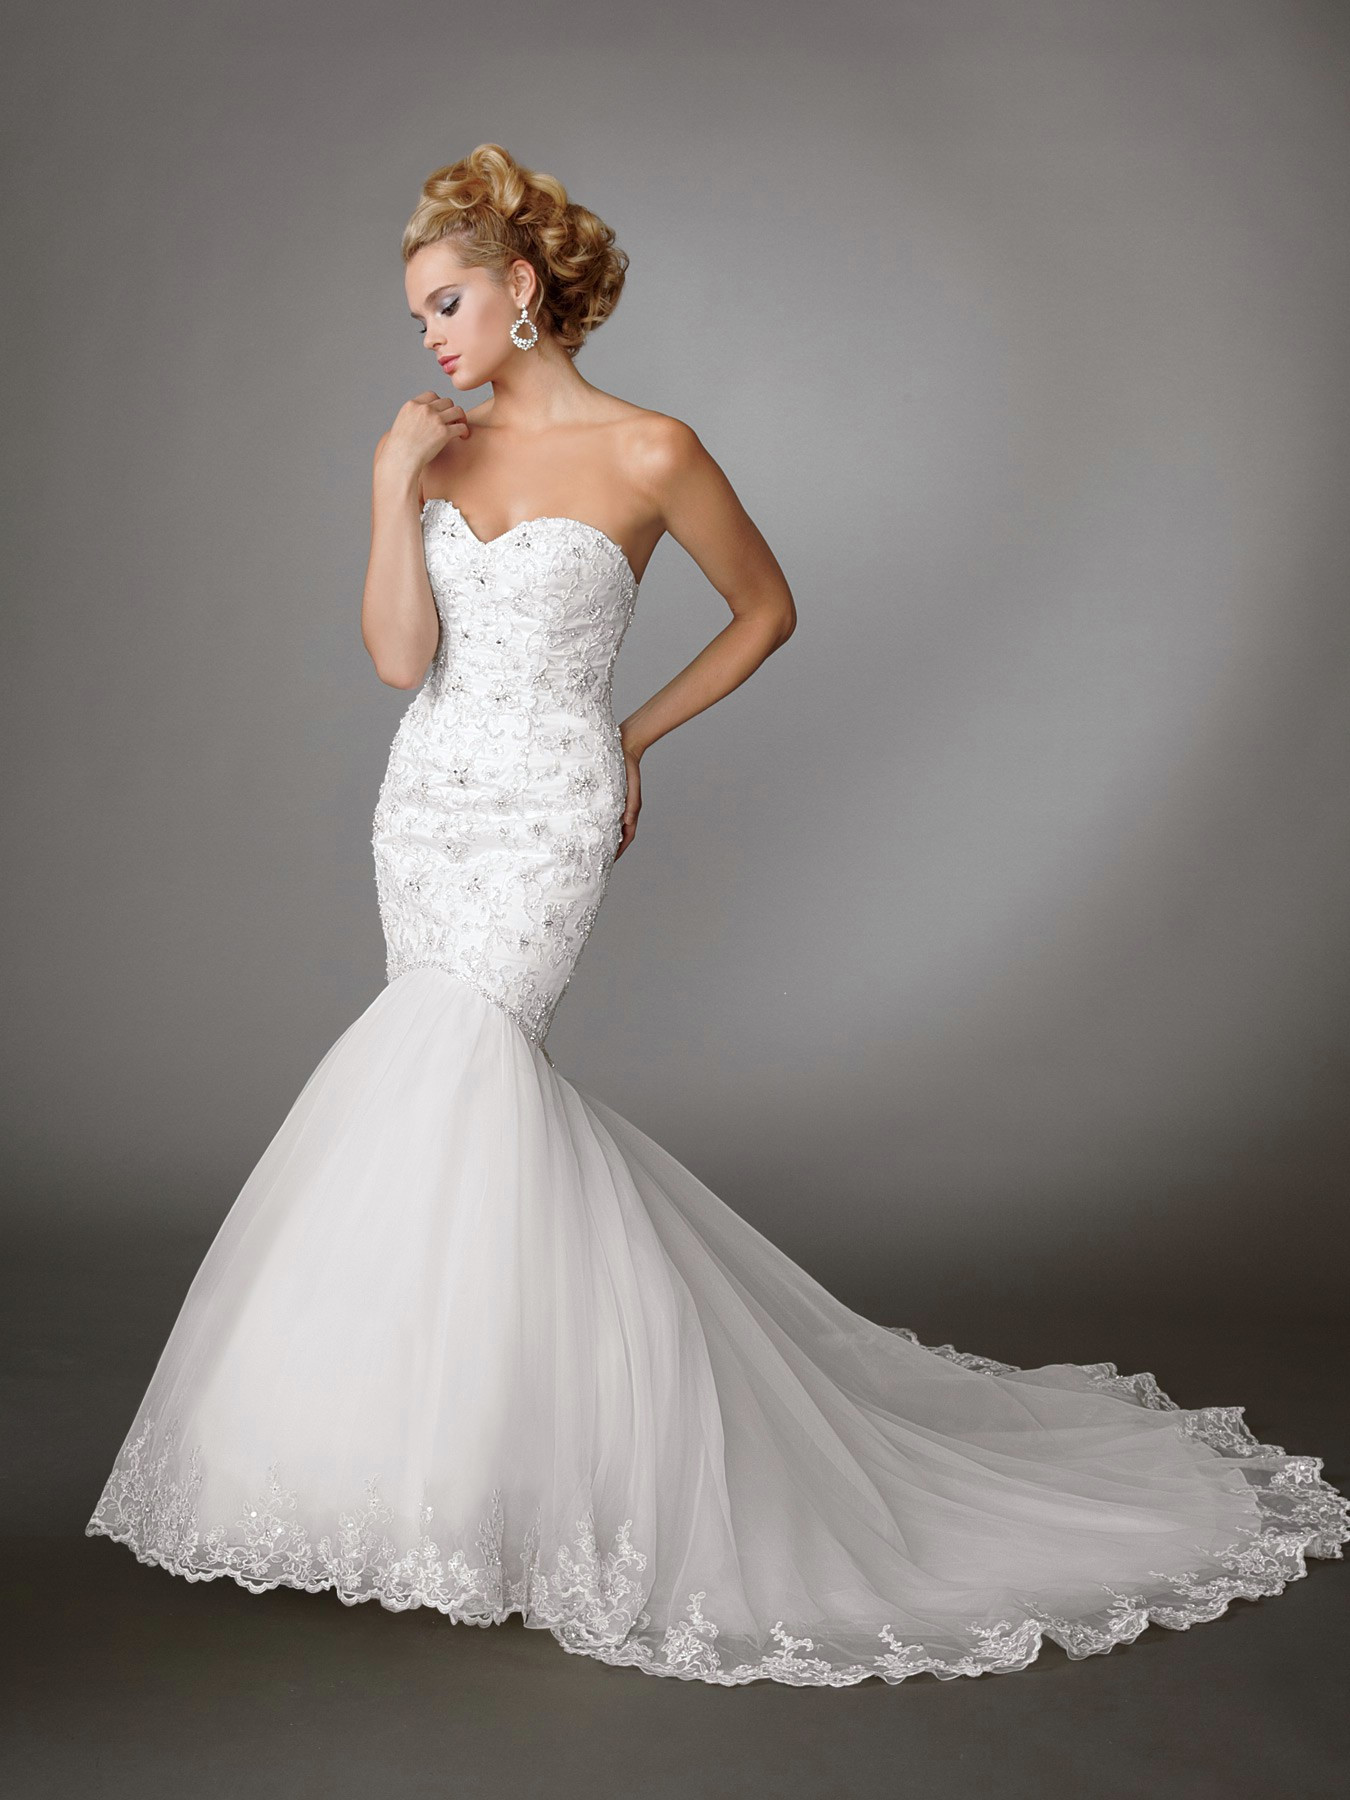 Mermaid Dress Wedding
 Mermaid Wedding Dresses – An Elegant Choice For Brides